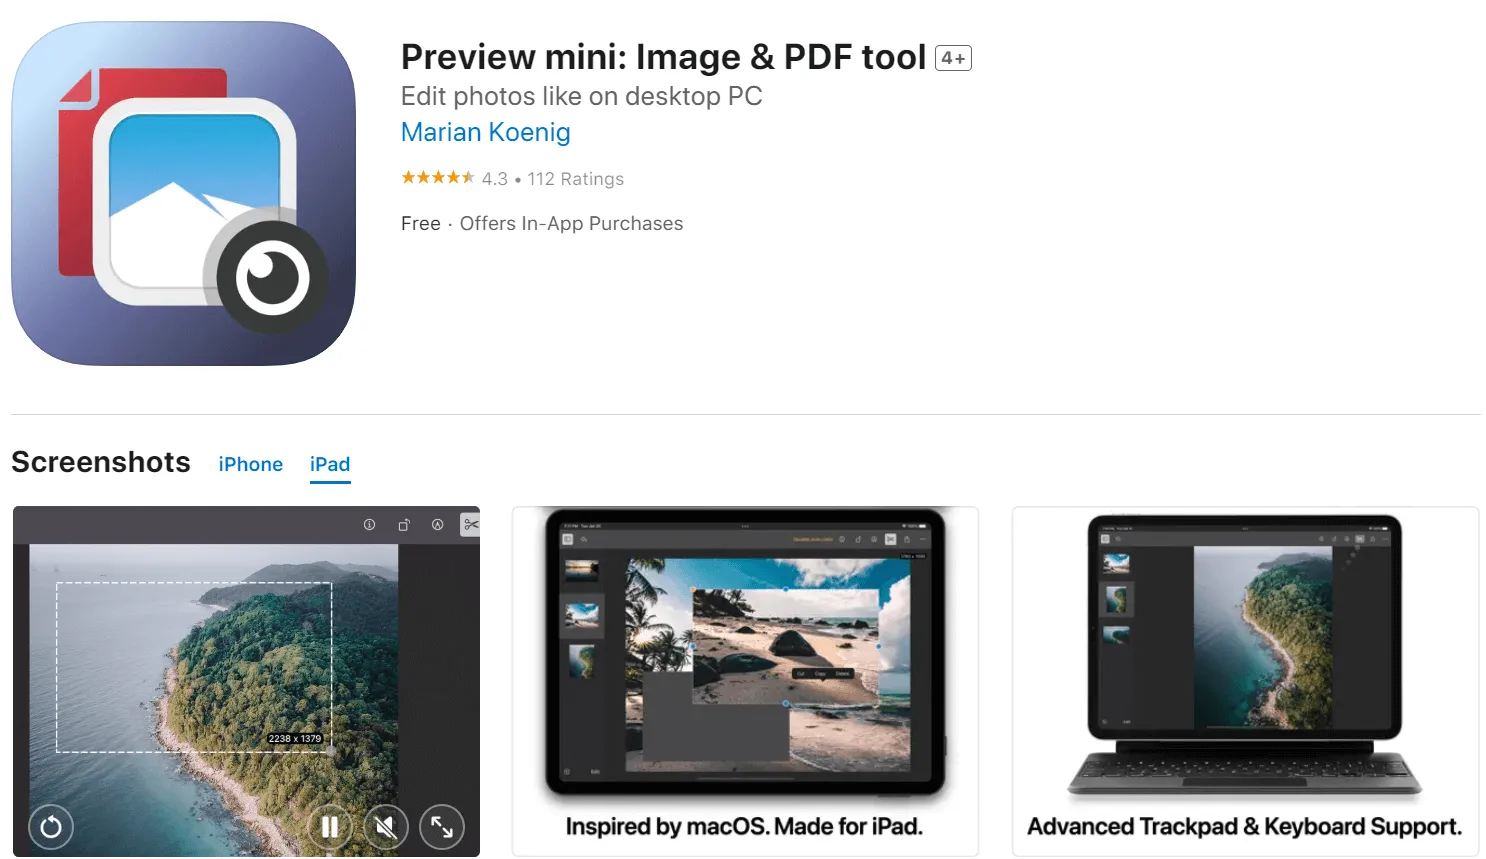 pdf viewer ipad preview mini for ipad